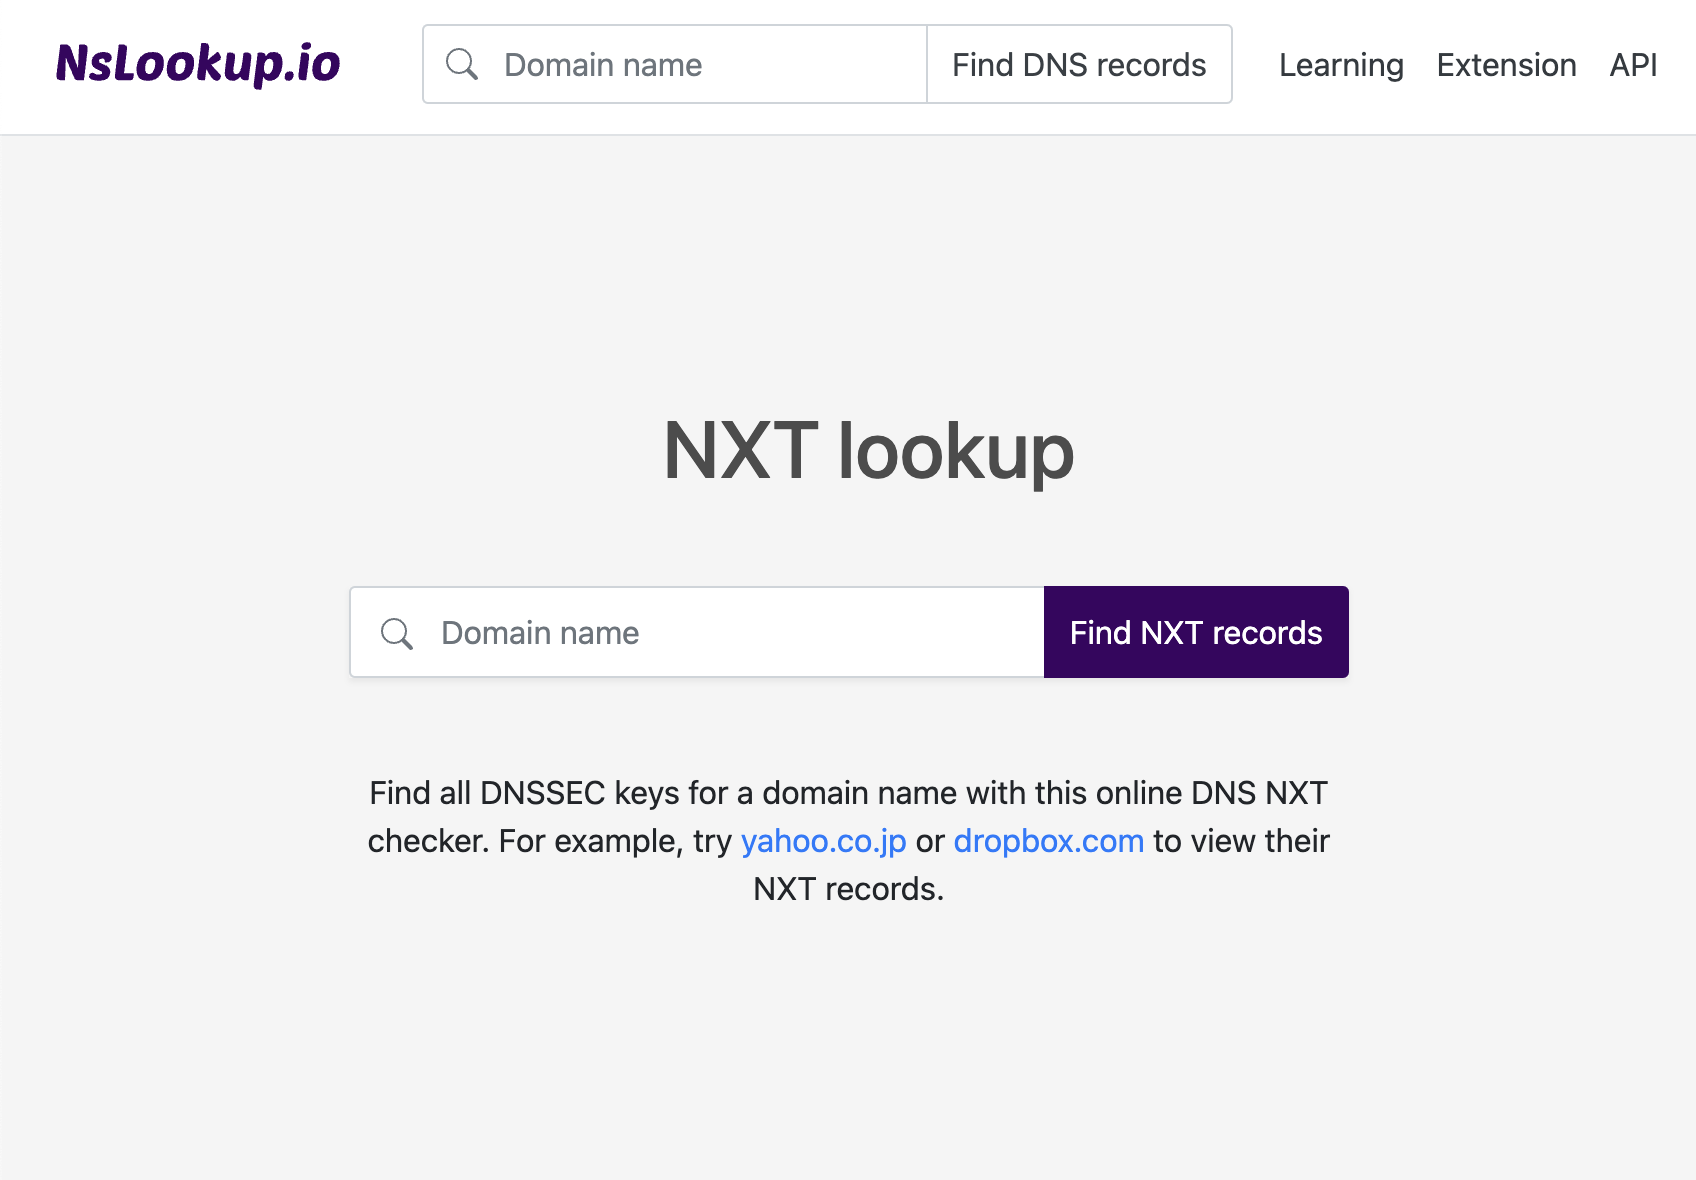 Open the NXT lookup tool